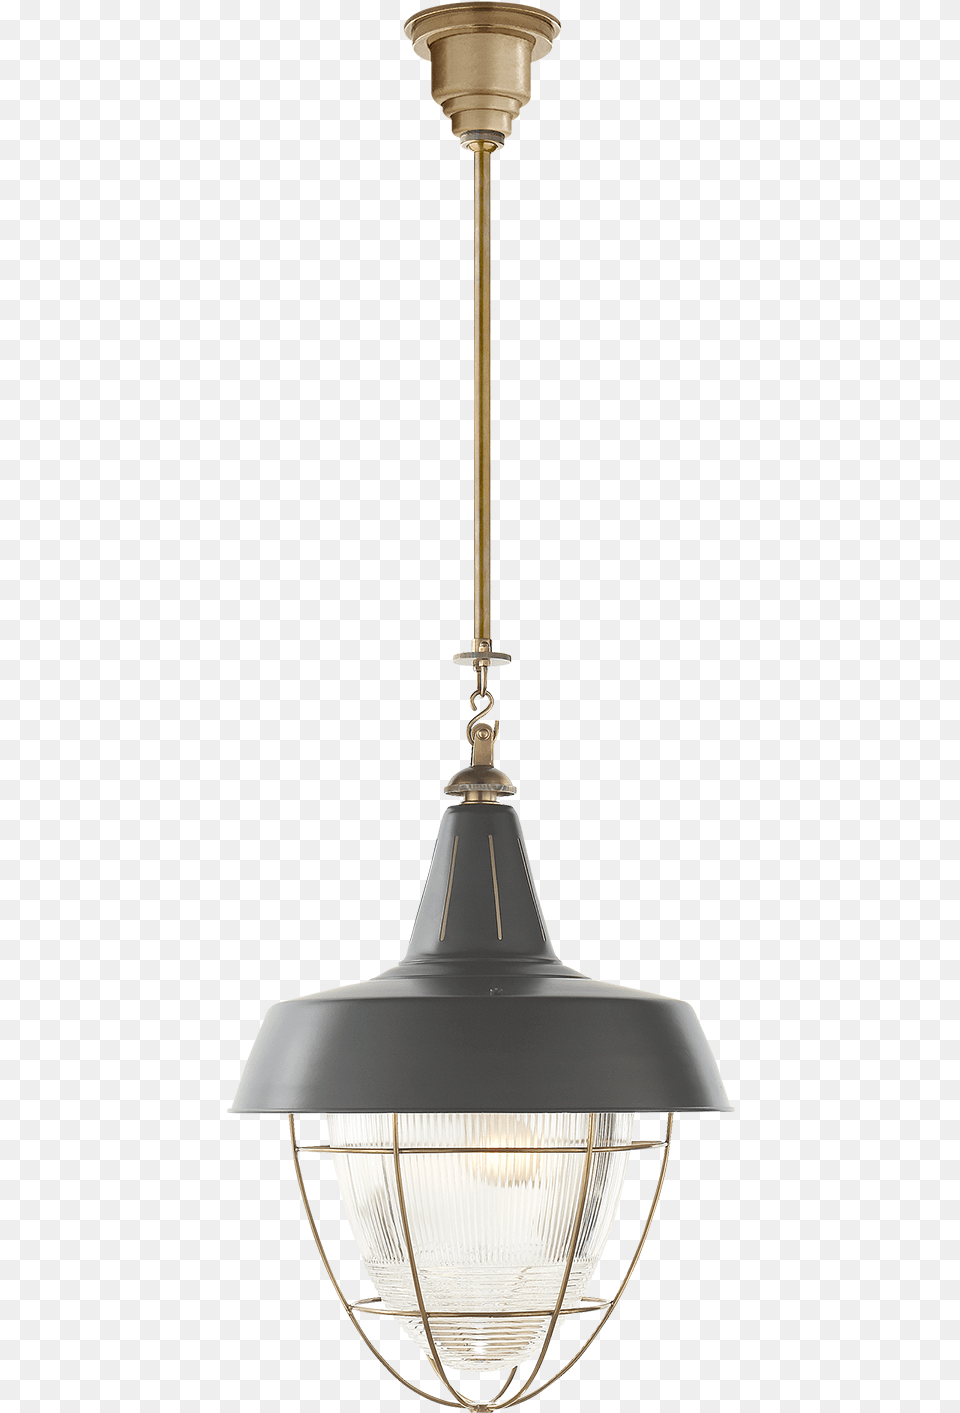 Henry Industrial Hanging Light, Lamp, Light Fixture, Chandelier Png